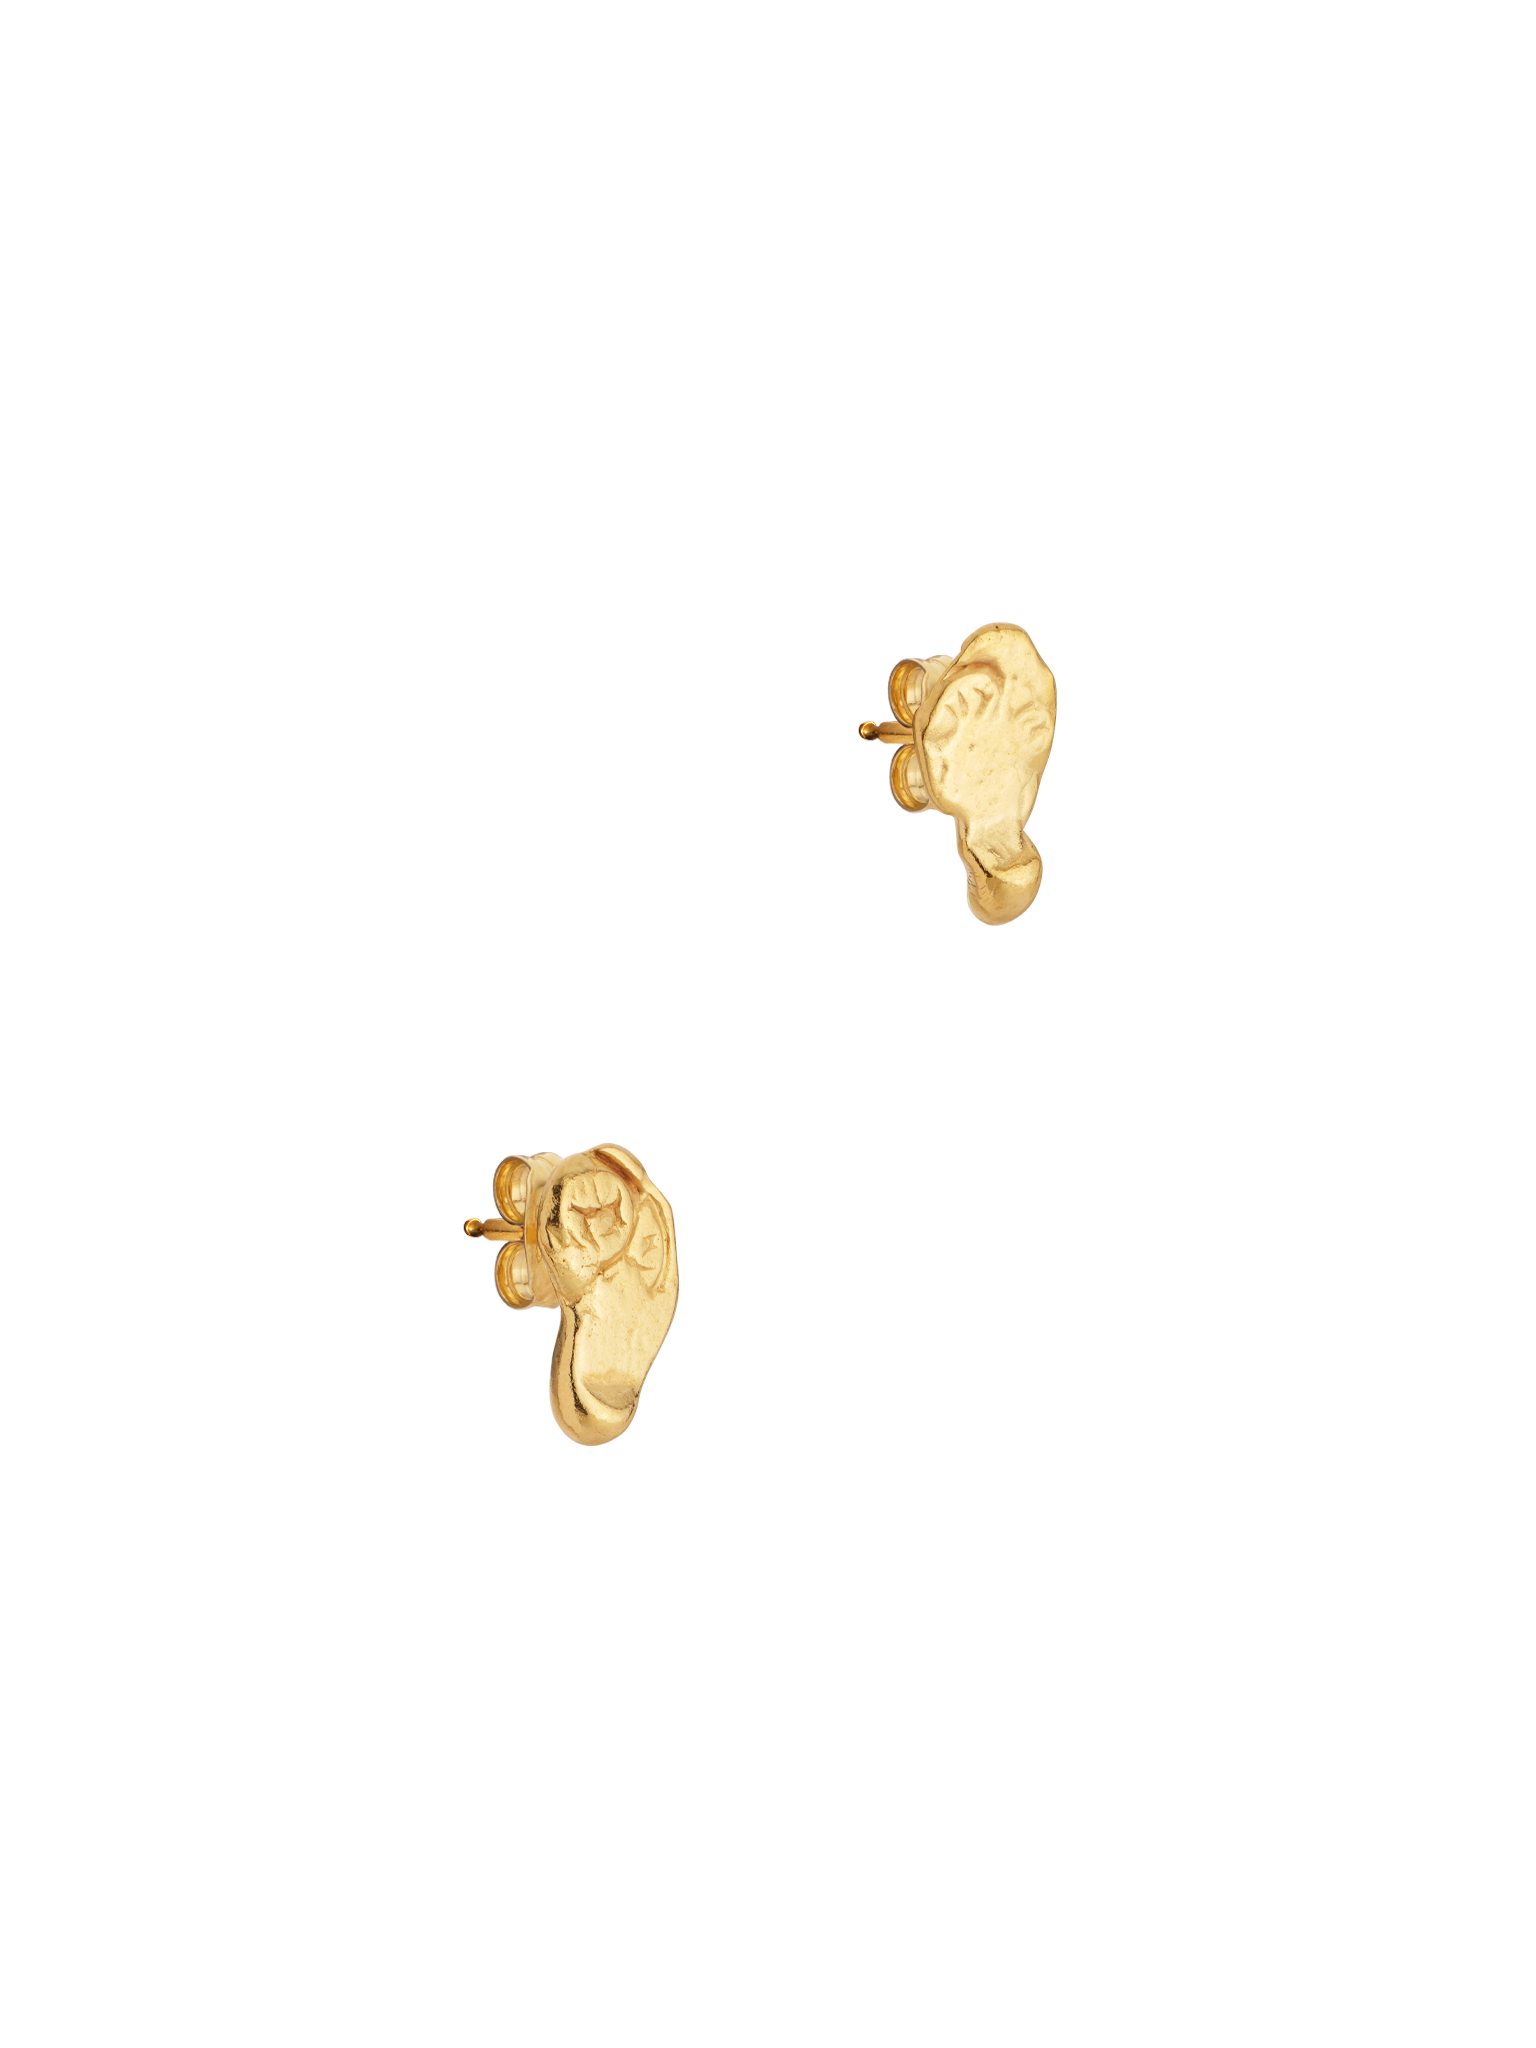 18kt gold vermeil pinch stud earrings no.9